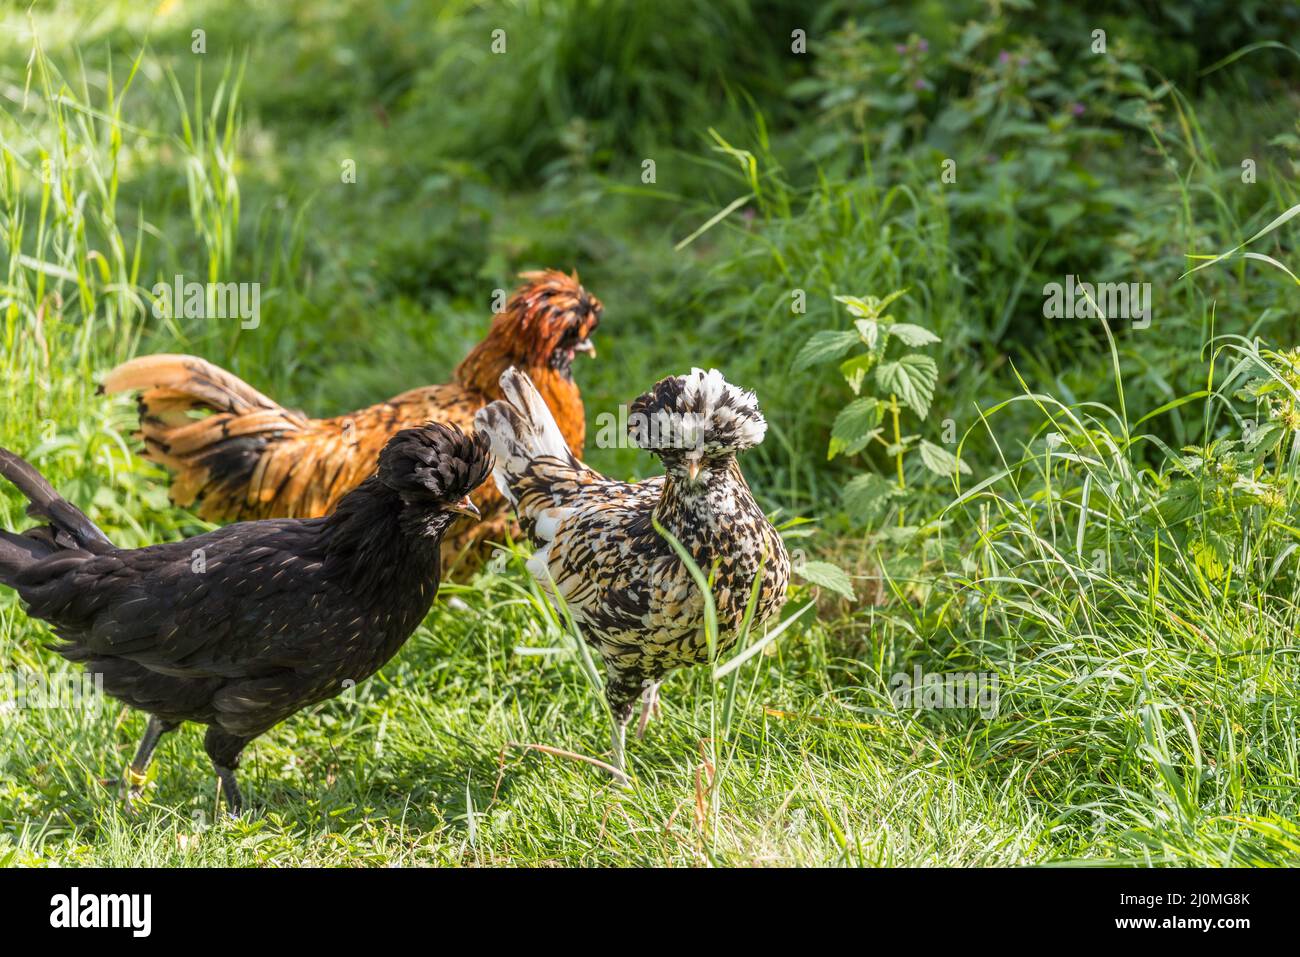 Silk hen - free range chickens on the farm Stock Photo